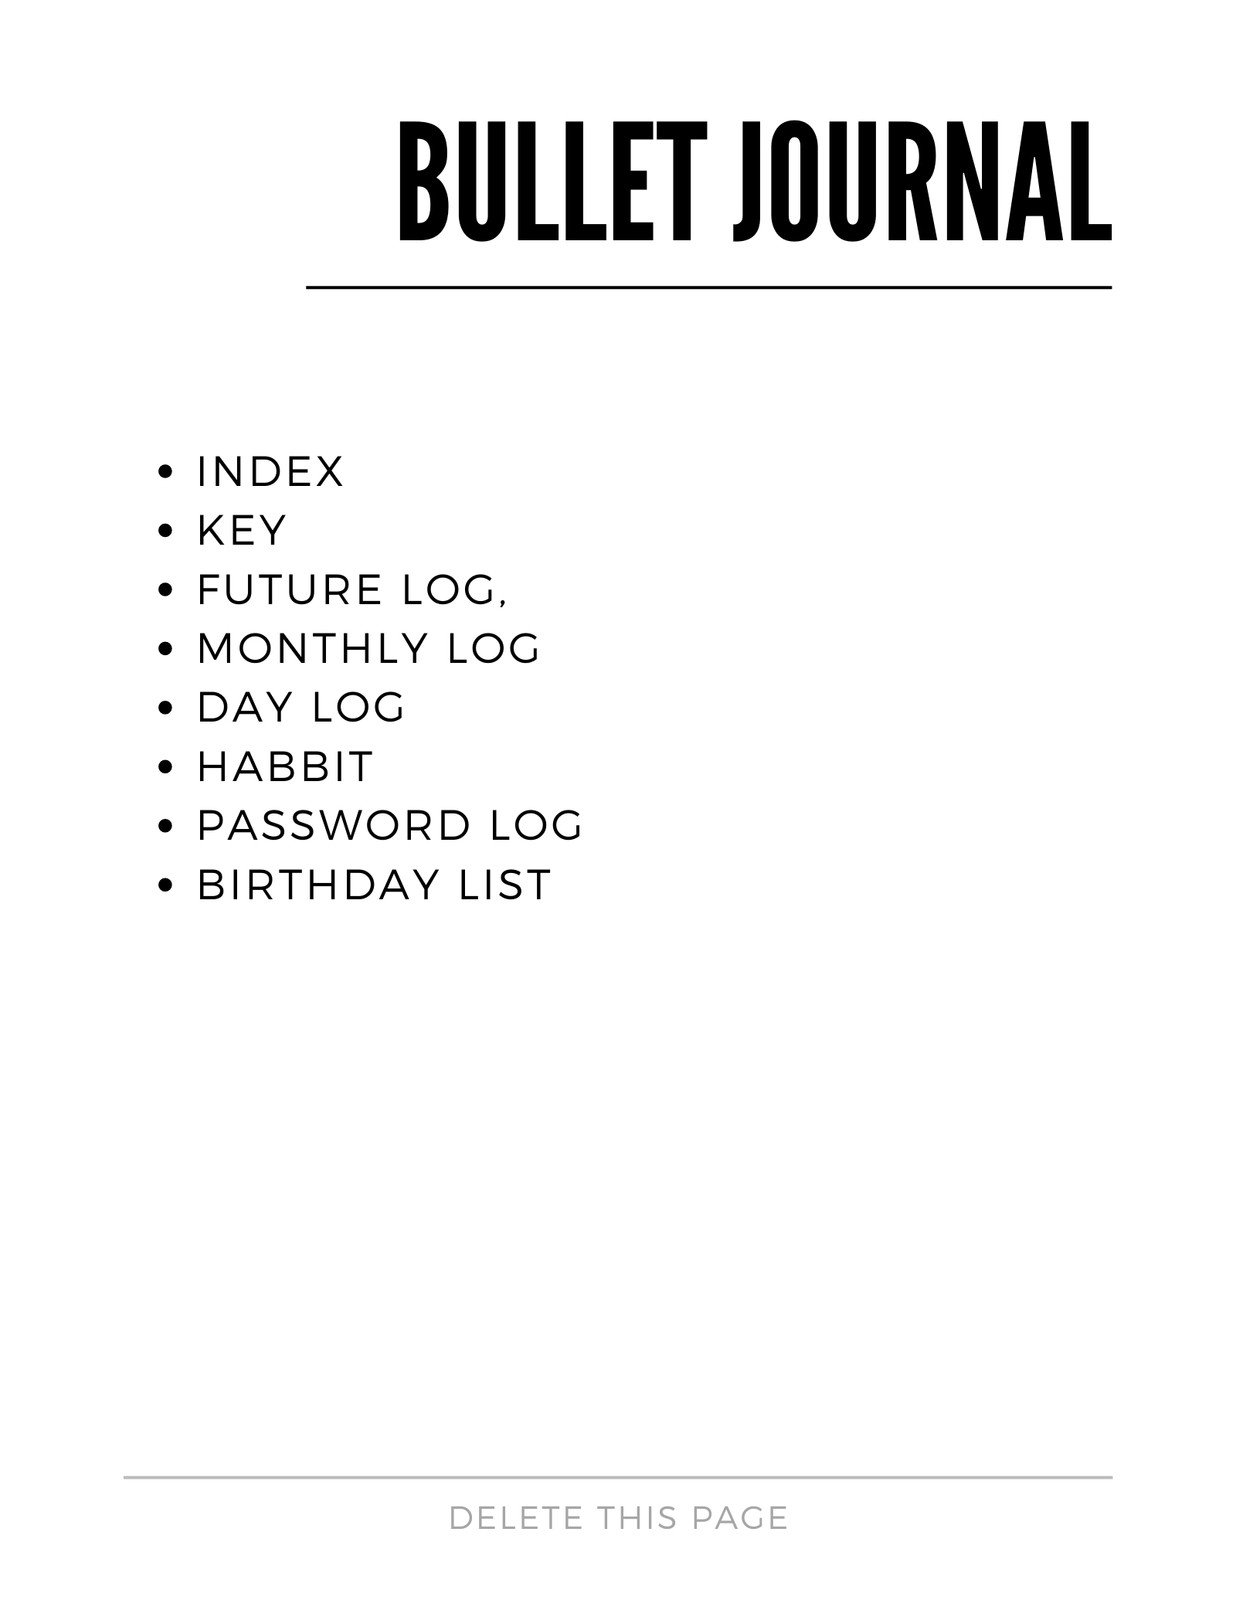 Days of the Week Stickers / Bullet Journal Planner / Printable PDF